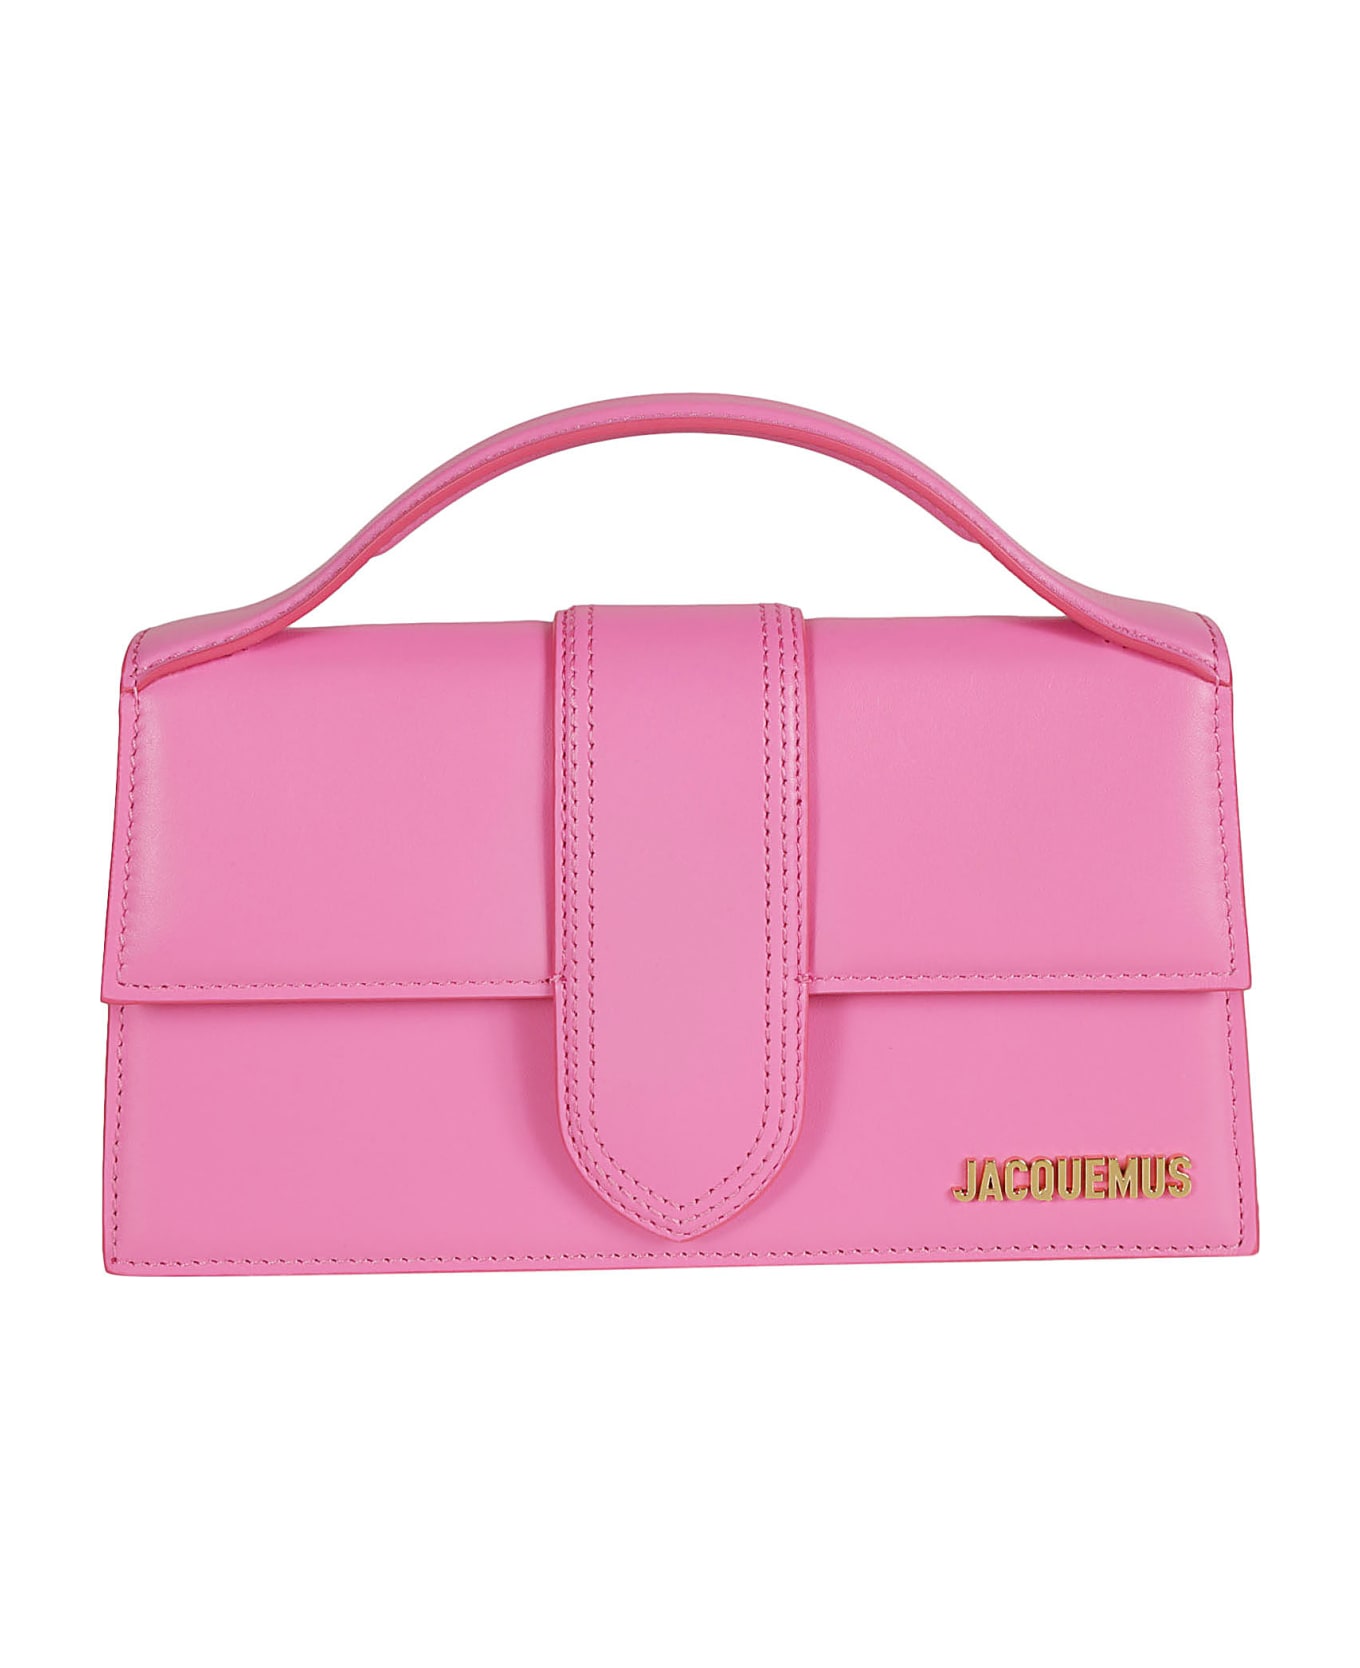 Jacquemus Le Grand Bambino Leather Bag - Neon pink